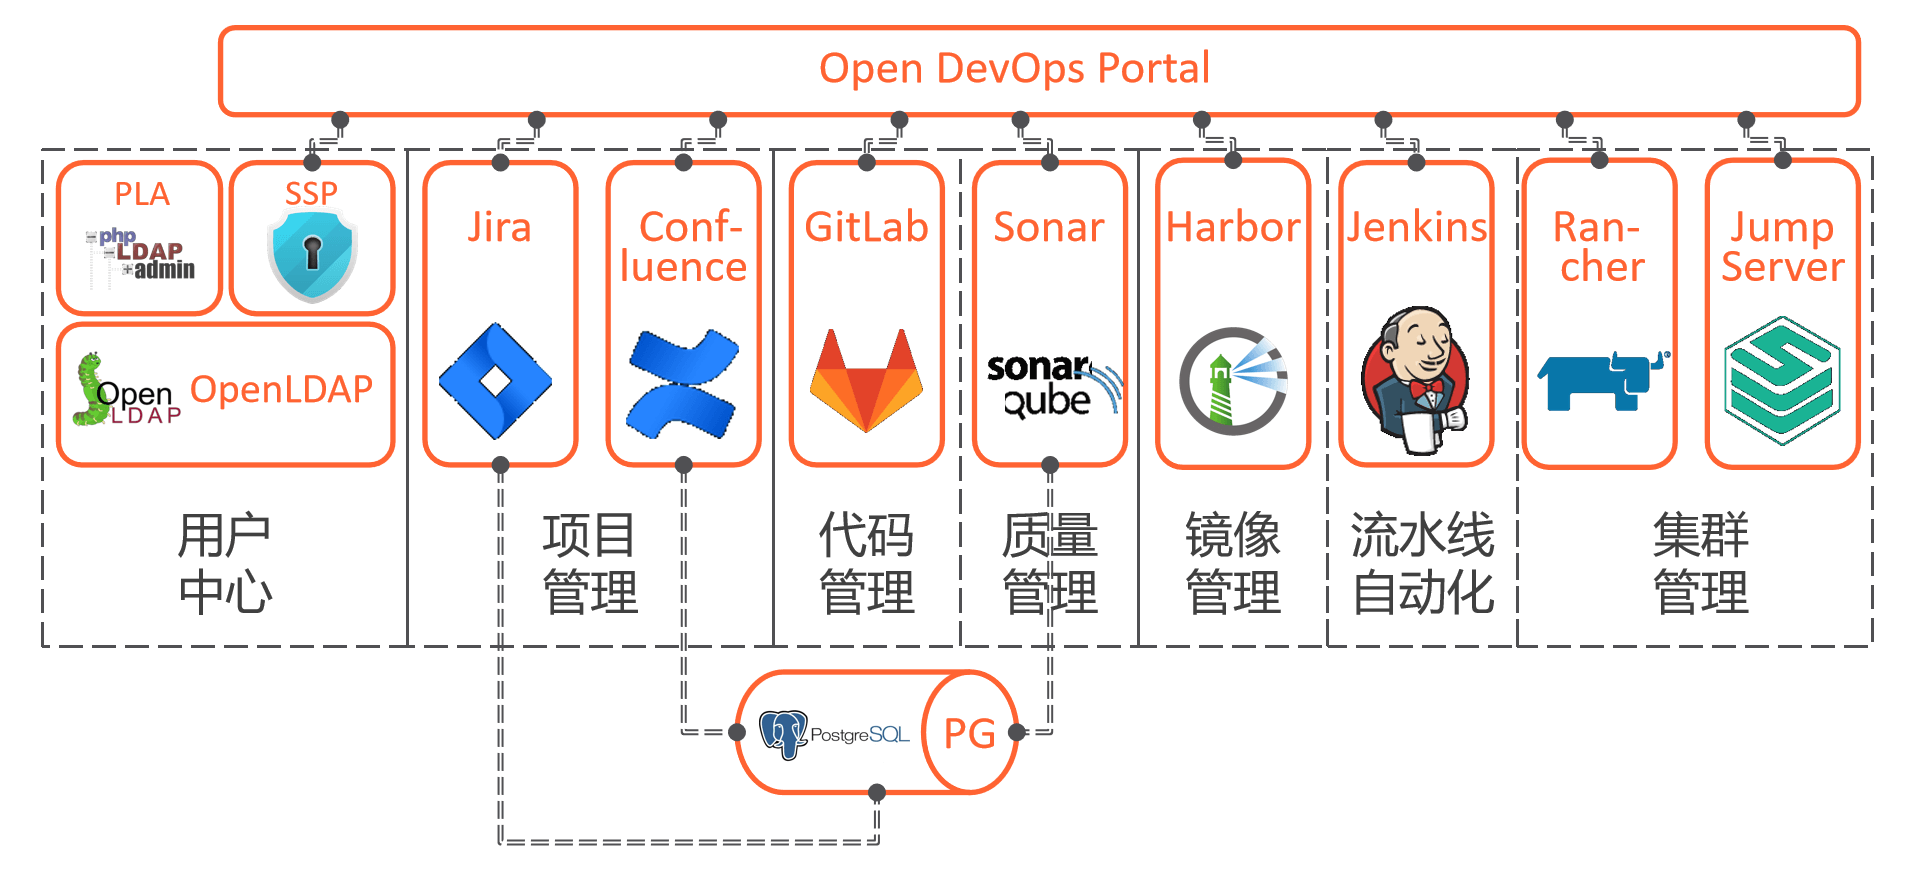 Open DevOps Services